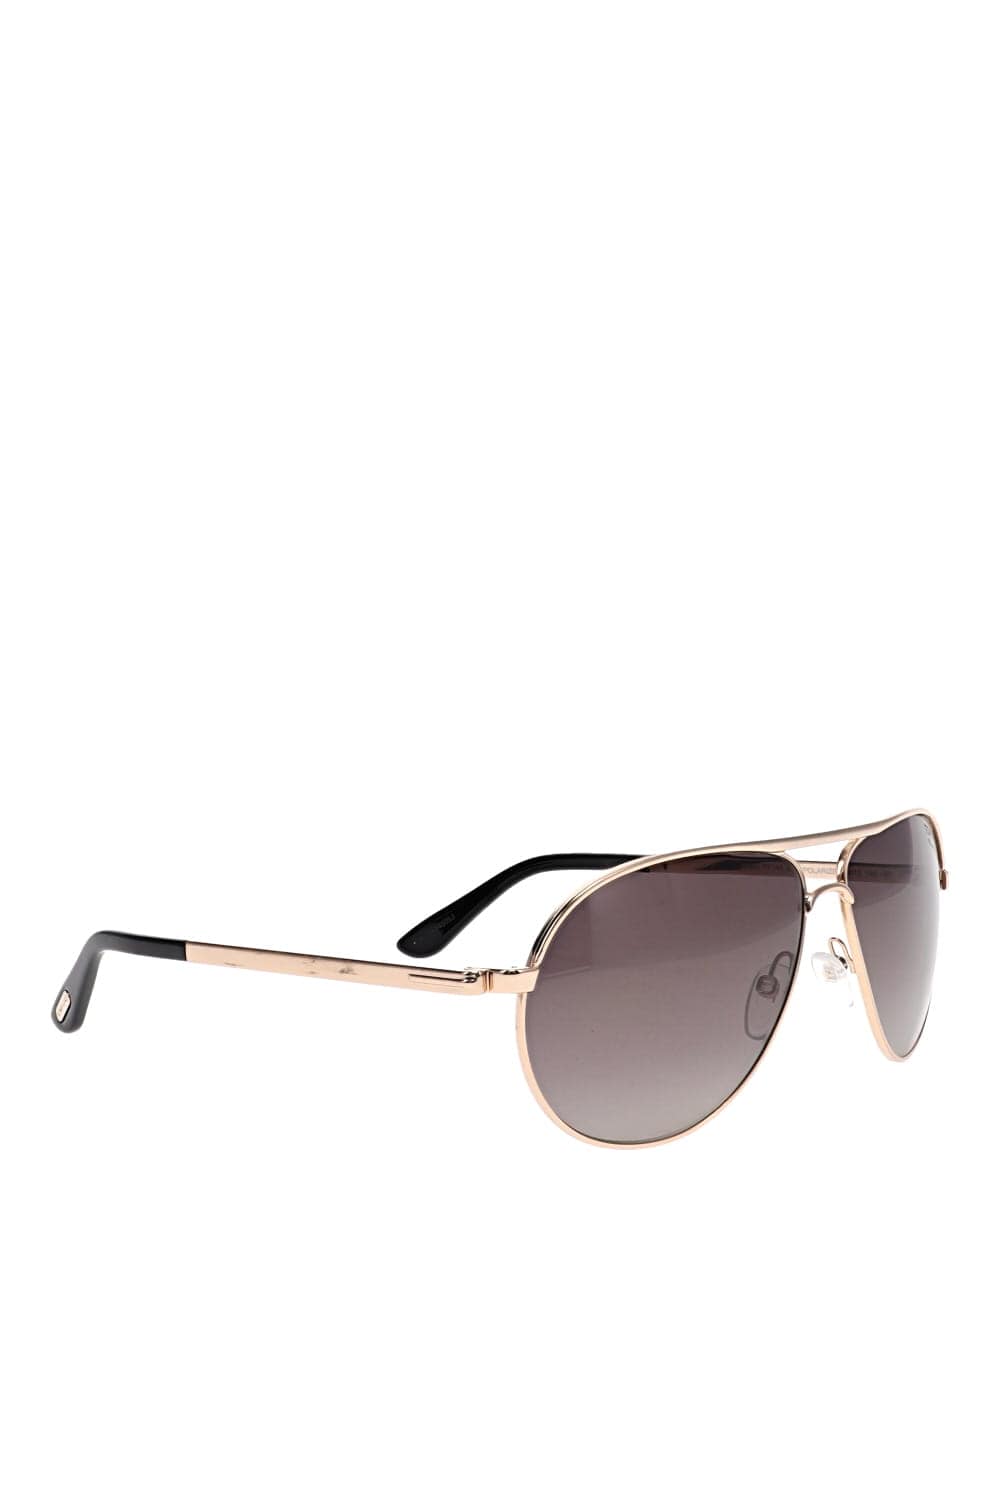 Tom Ford Eyewear Marko Polarized Grey Aviator Sunglasses